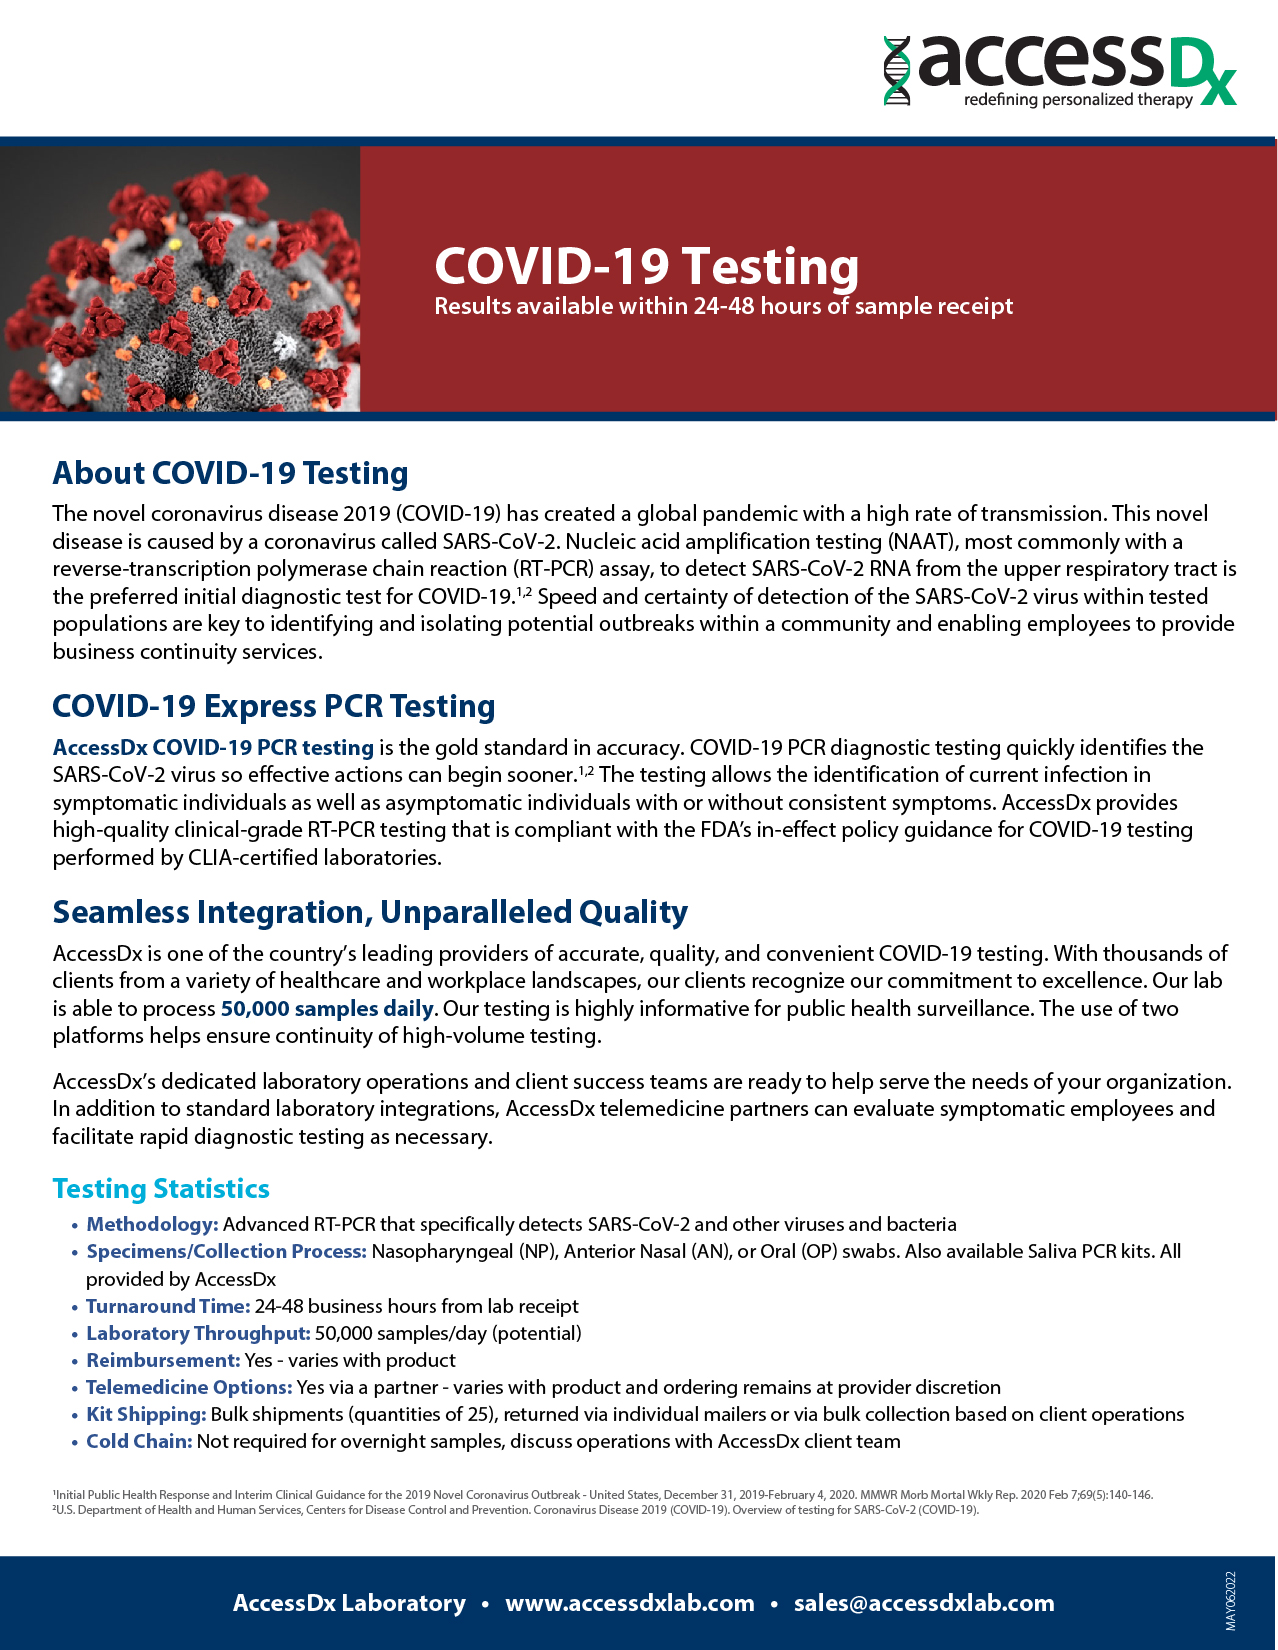 COVID-19 testing cover